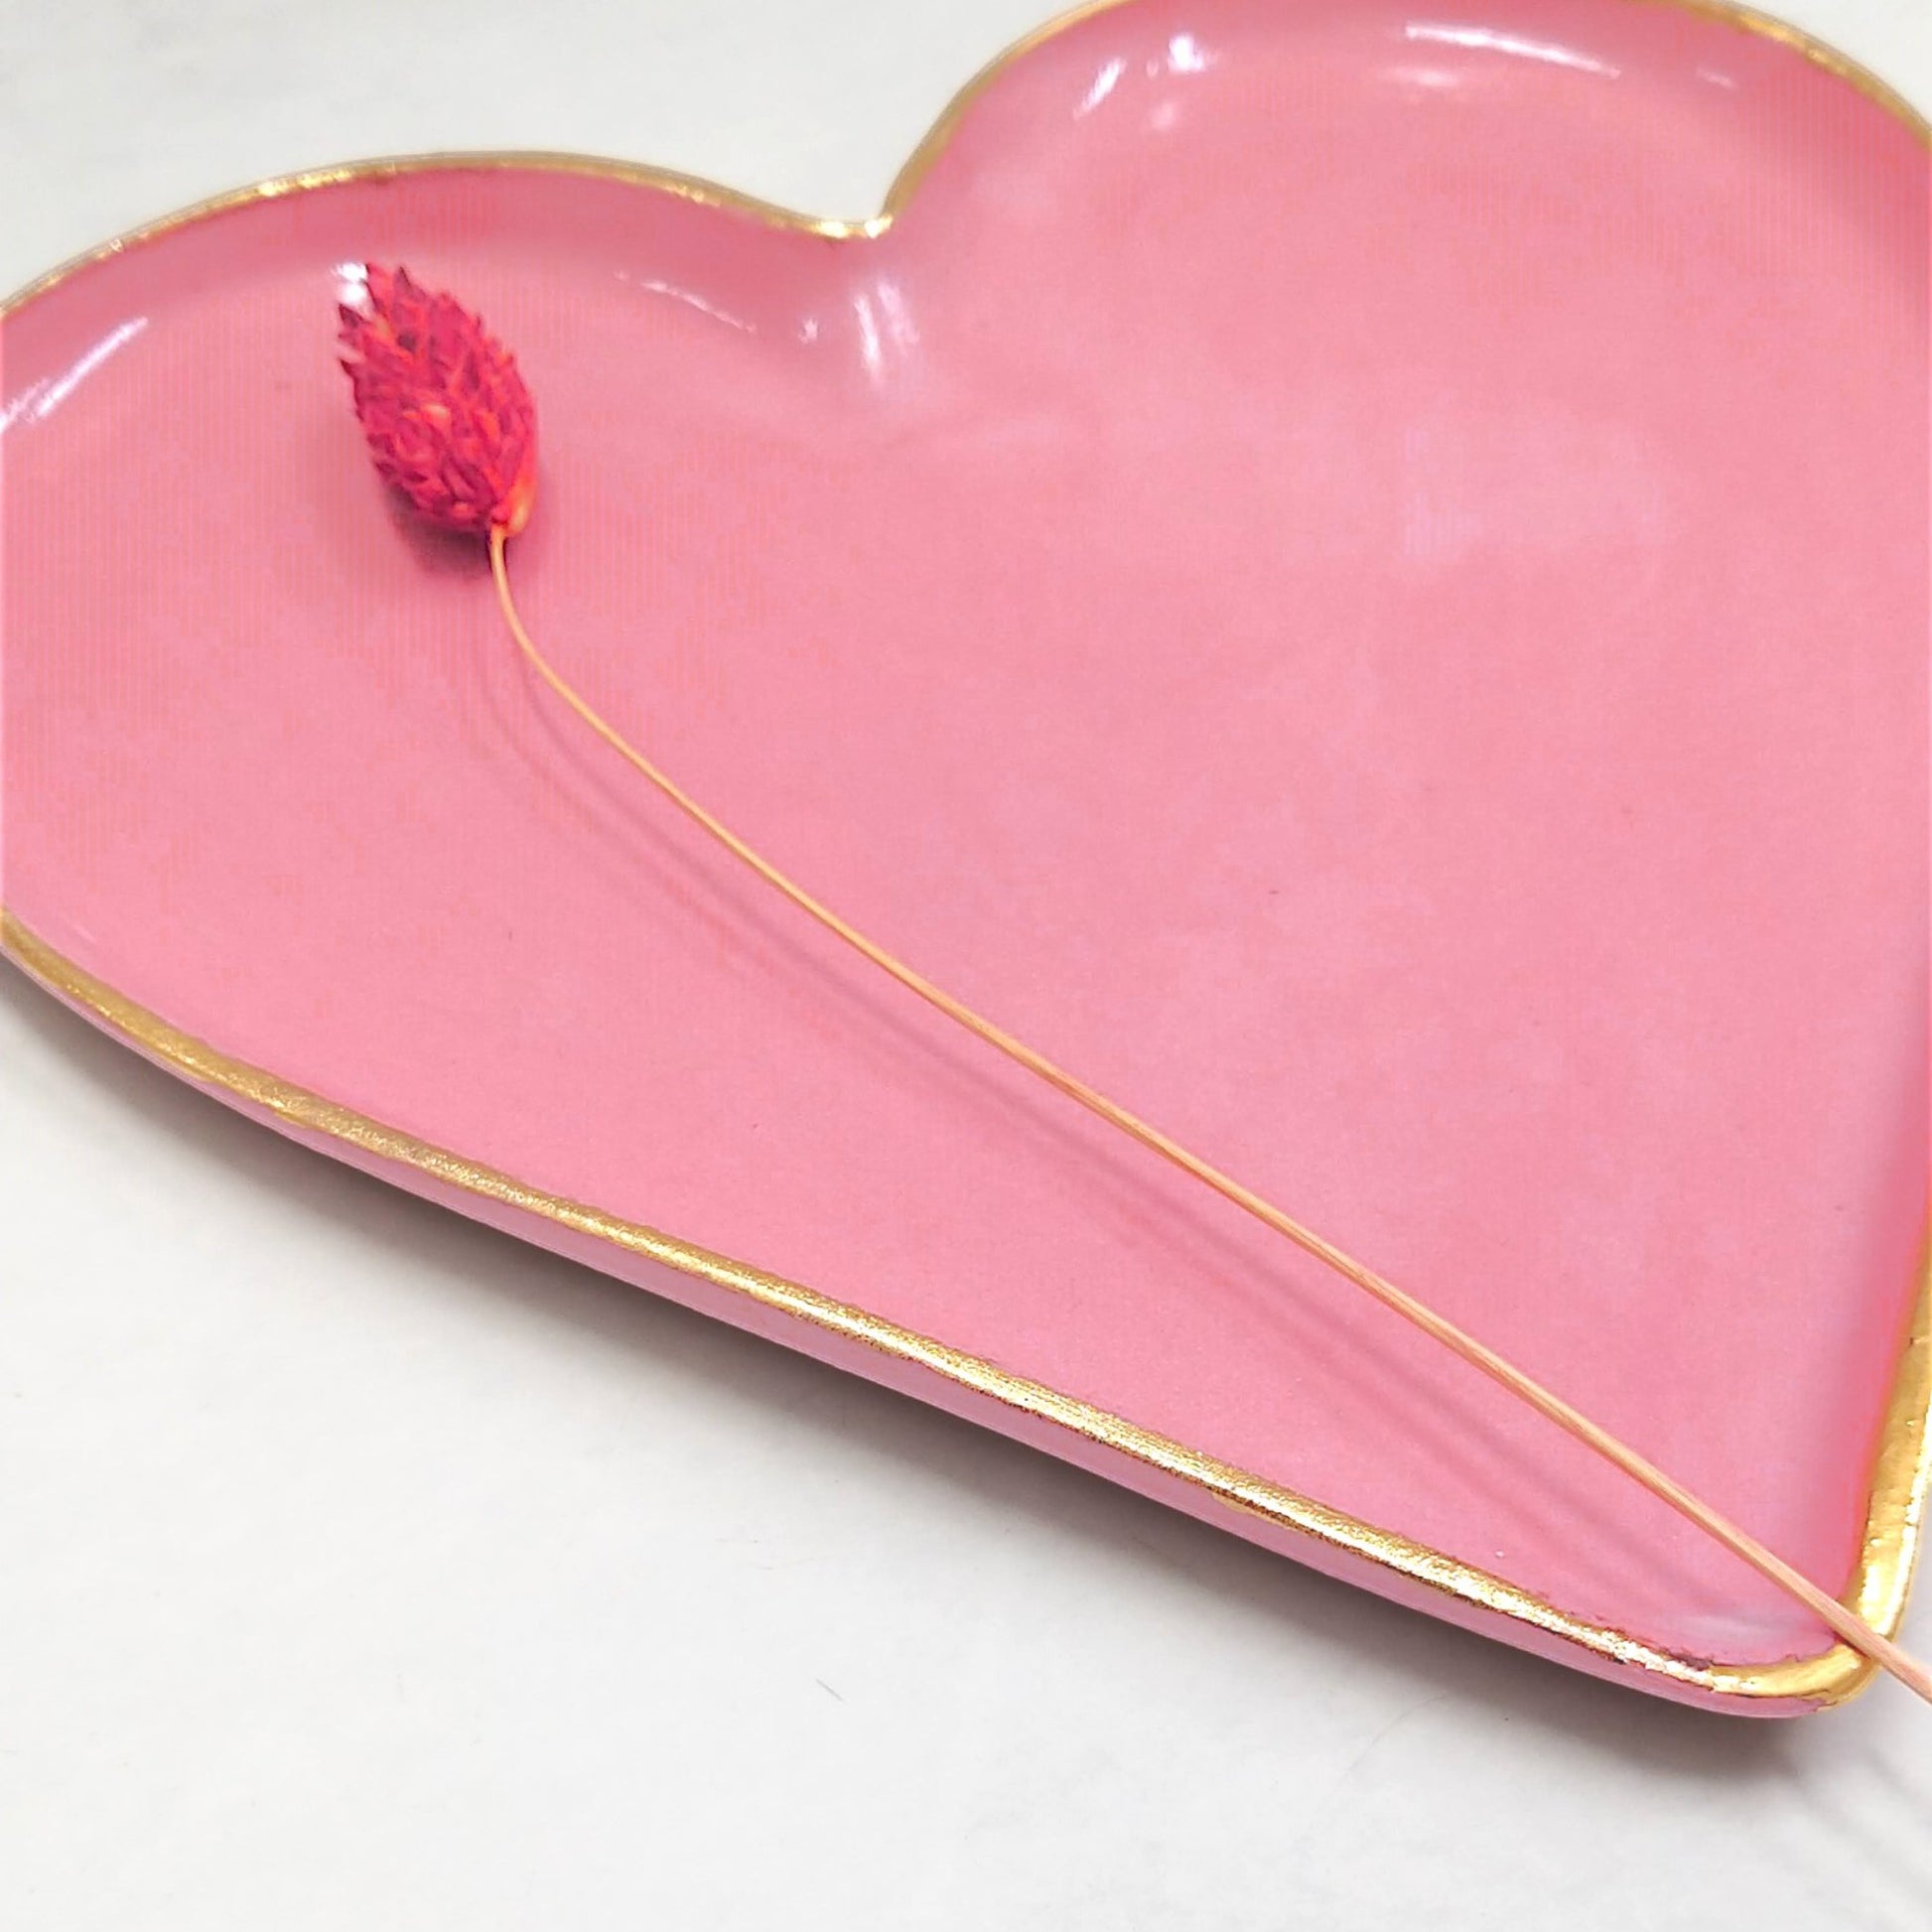 Pink gold 24k heart shape ceramic plate